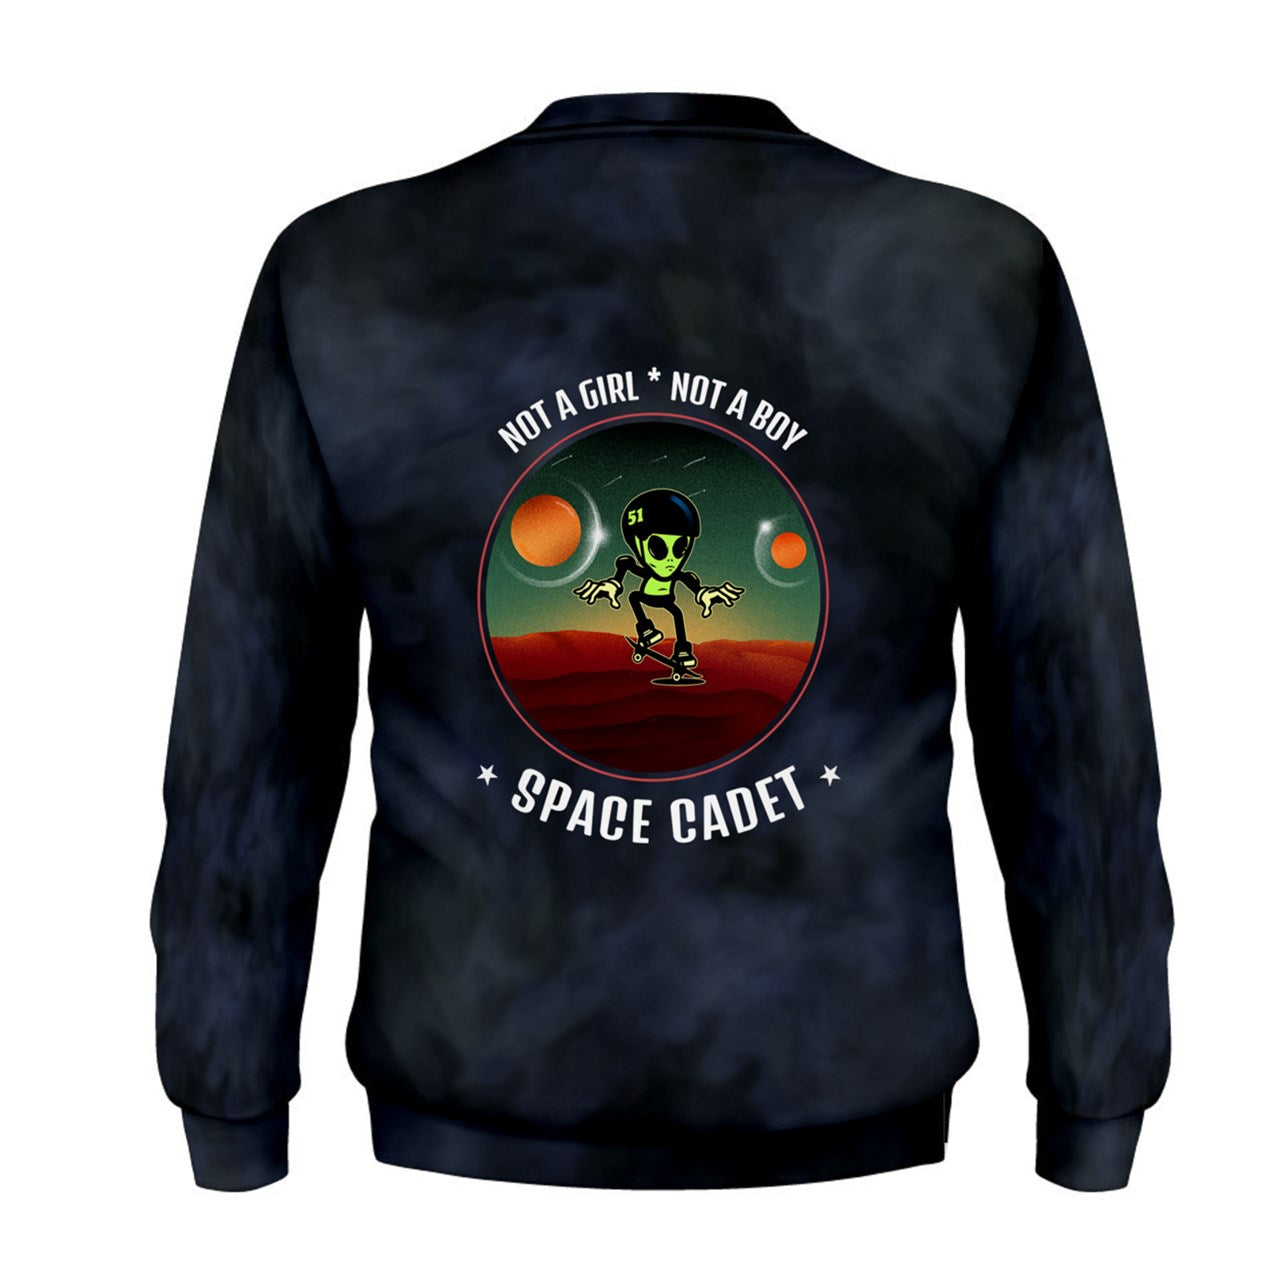 Smokey Blue Tie Dye Space Cadet Sweatshirt